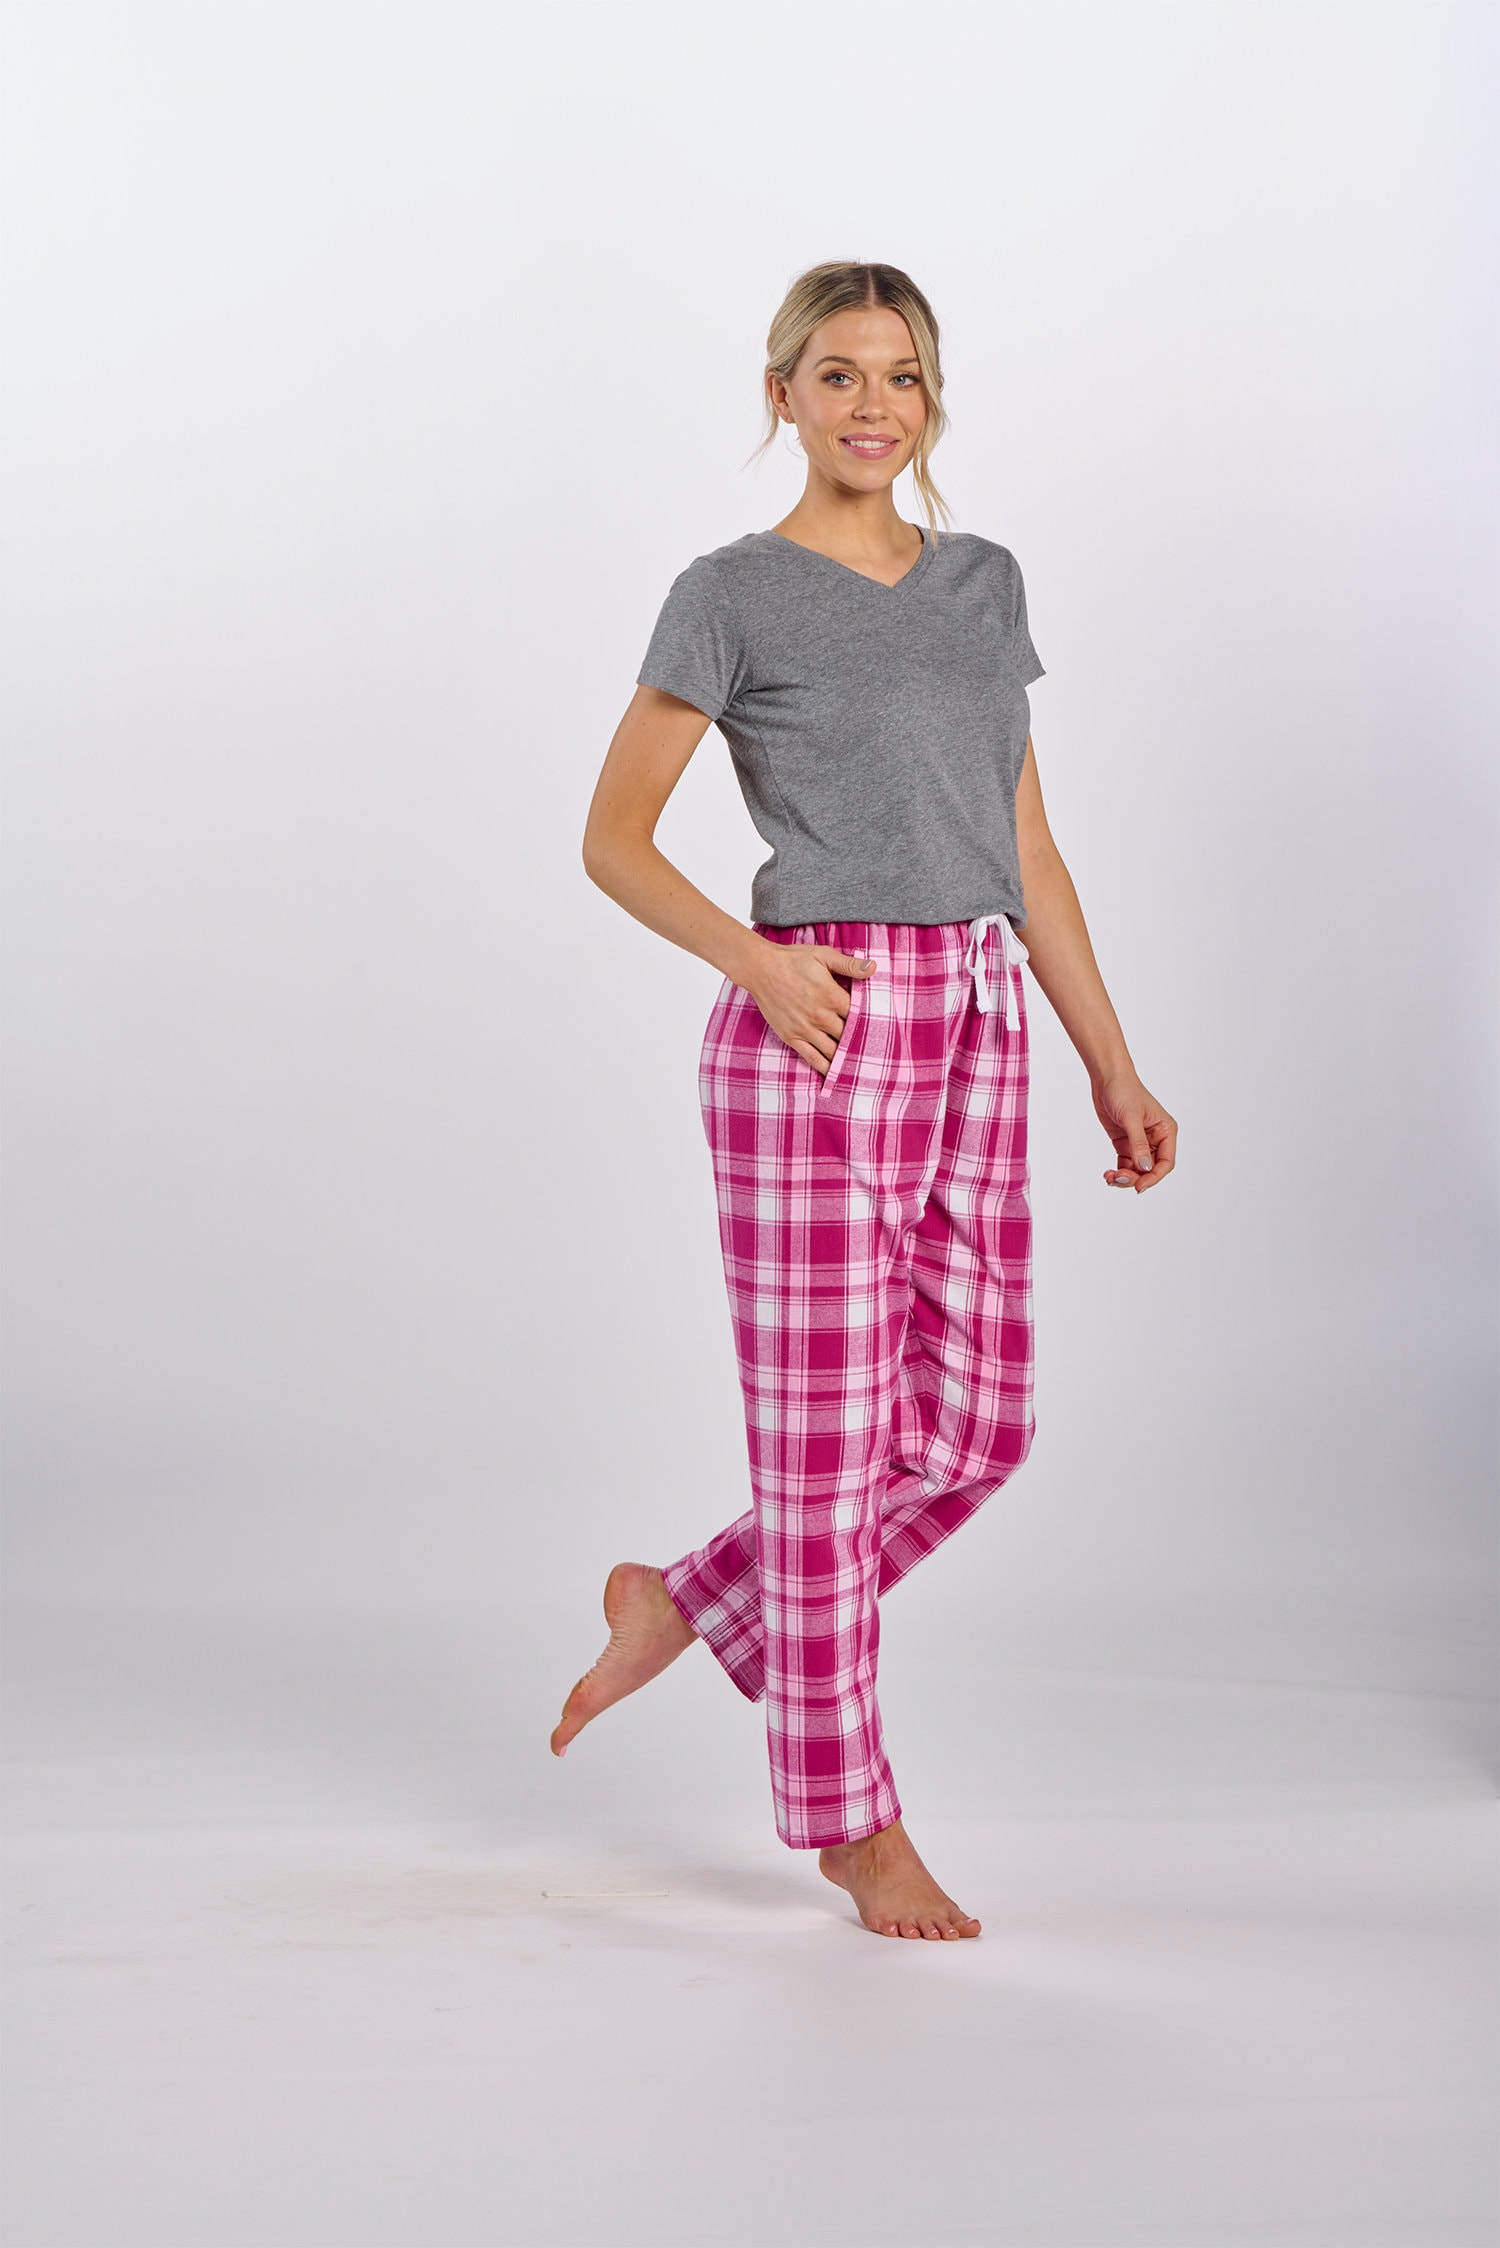 Phi Mu, Flannel Pajama Pants, Loungewear, Comfy Pj Pants, Pink Plaid Pajamas  Sleepwear Bottoms Rush Bid Day Gift Idea -  Canada